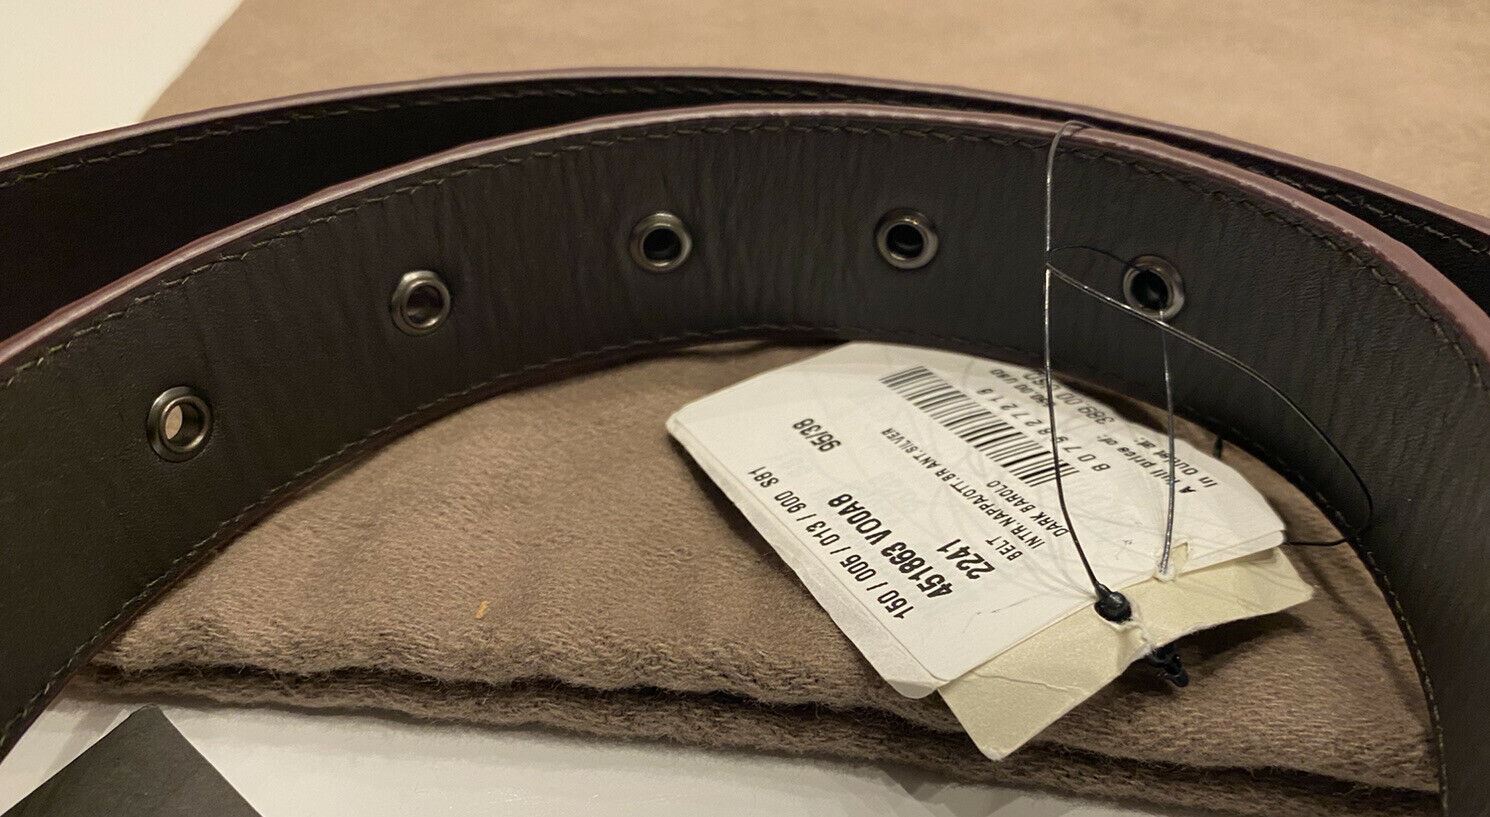 NWT $550 Bottega Veneta Intrecciato Nappa Leather Dark Barolo Belt 95/38 451863